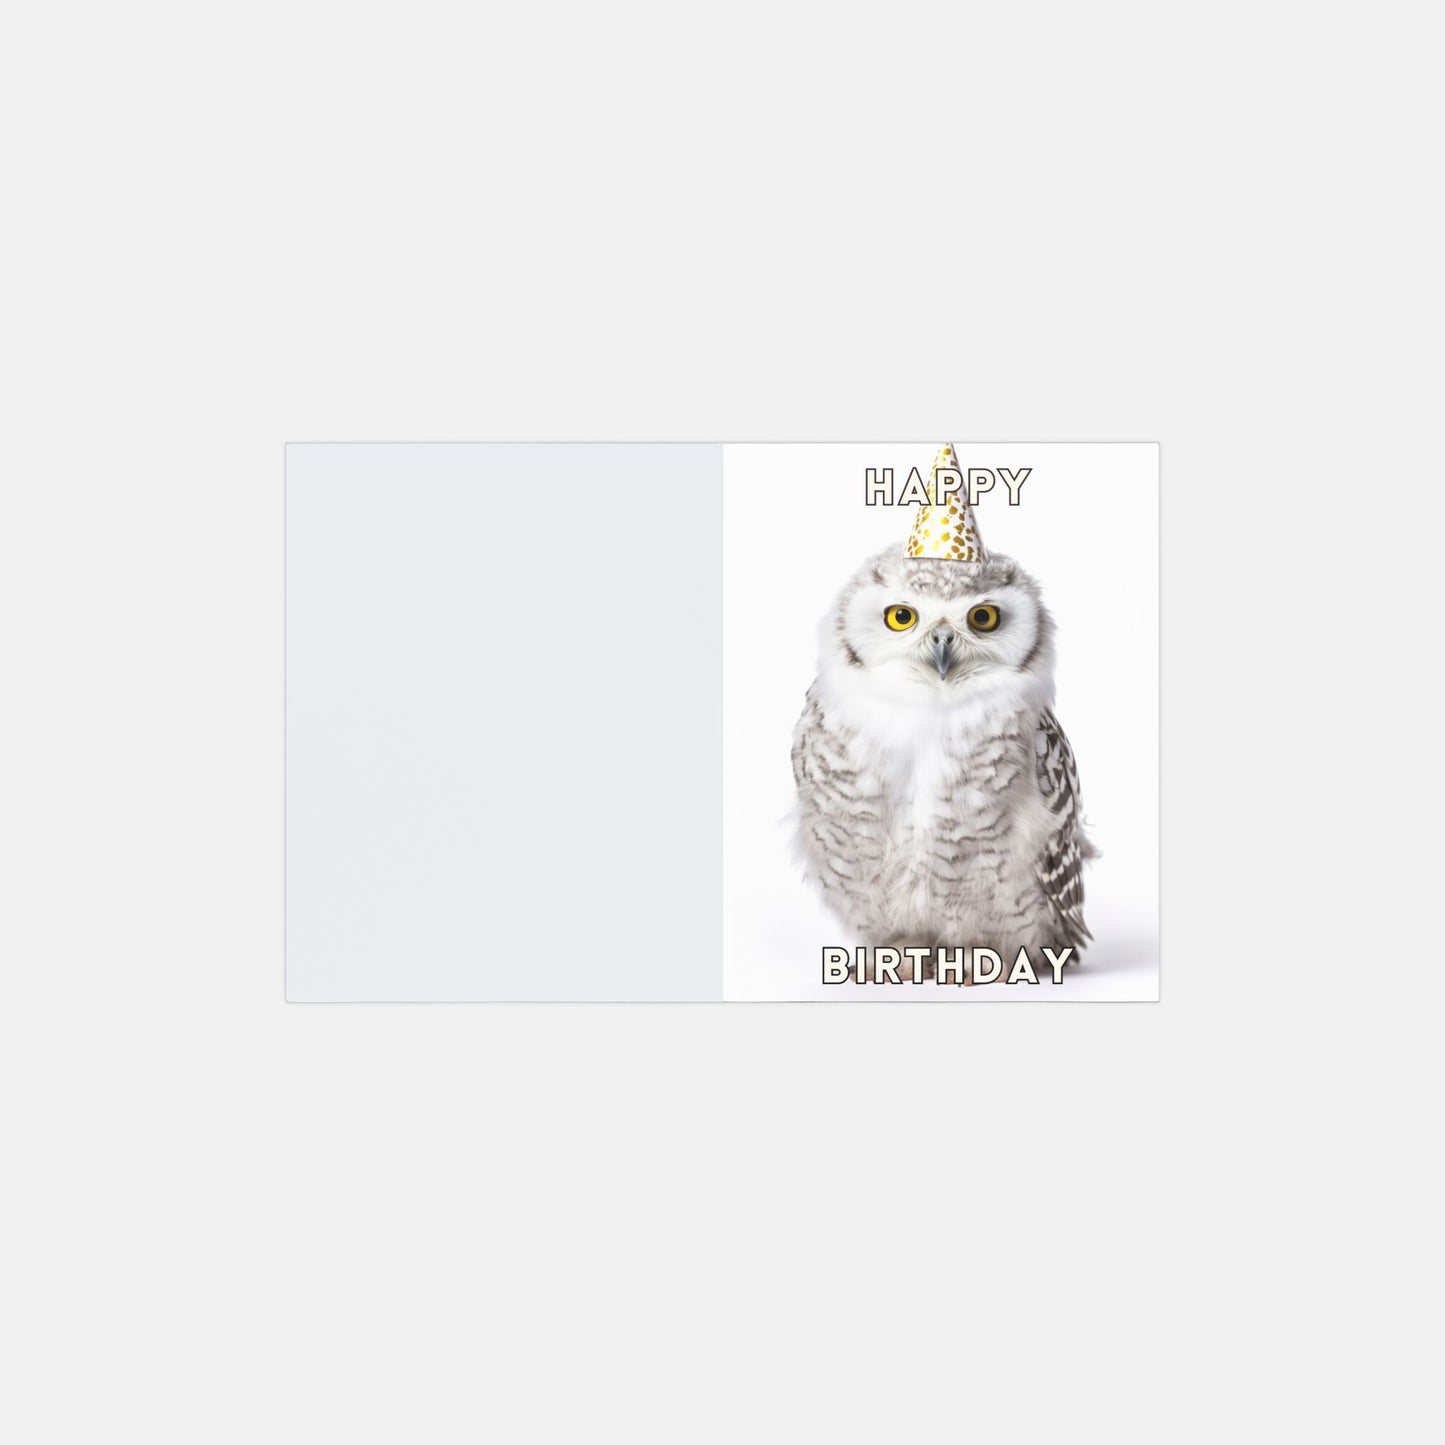 Owl Birthday Cards - 10 pack